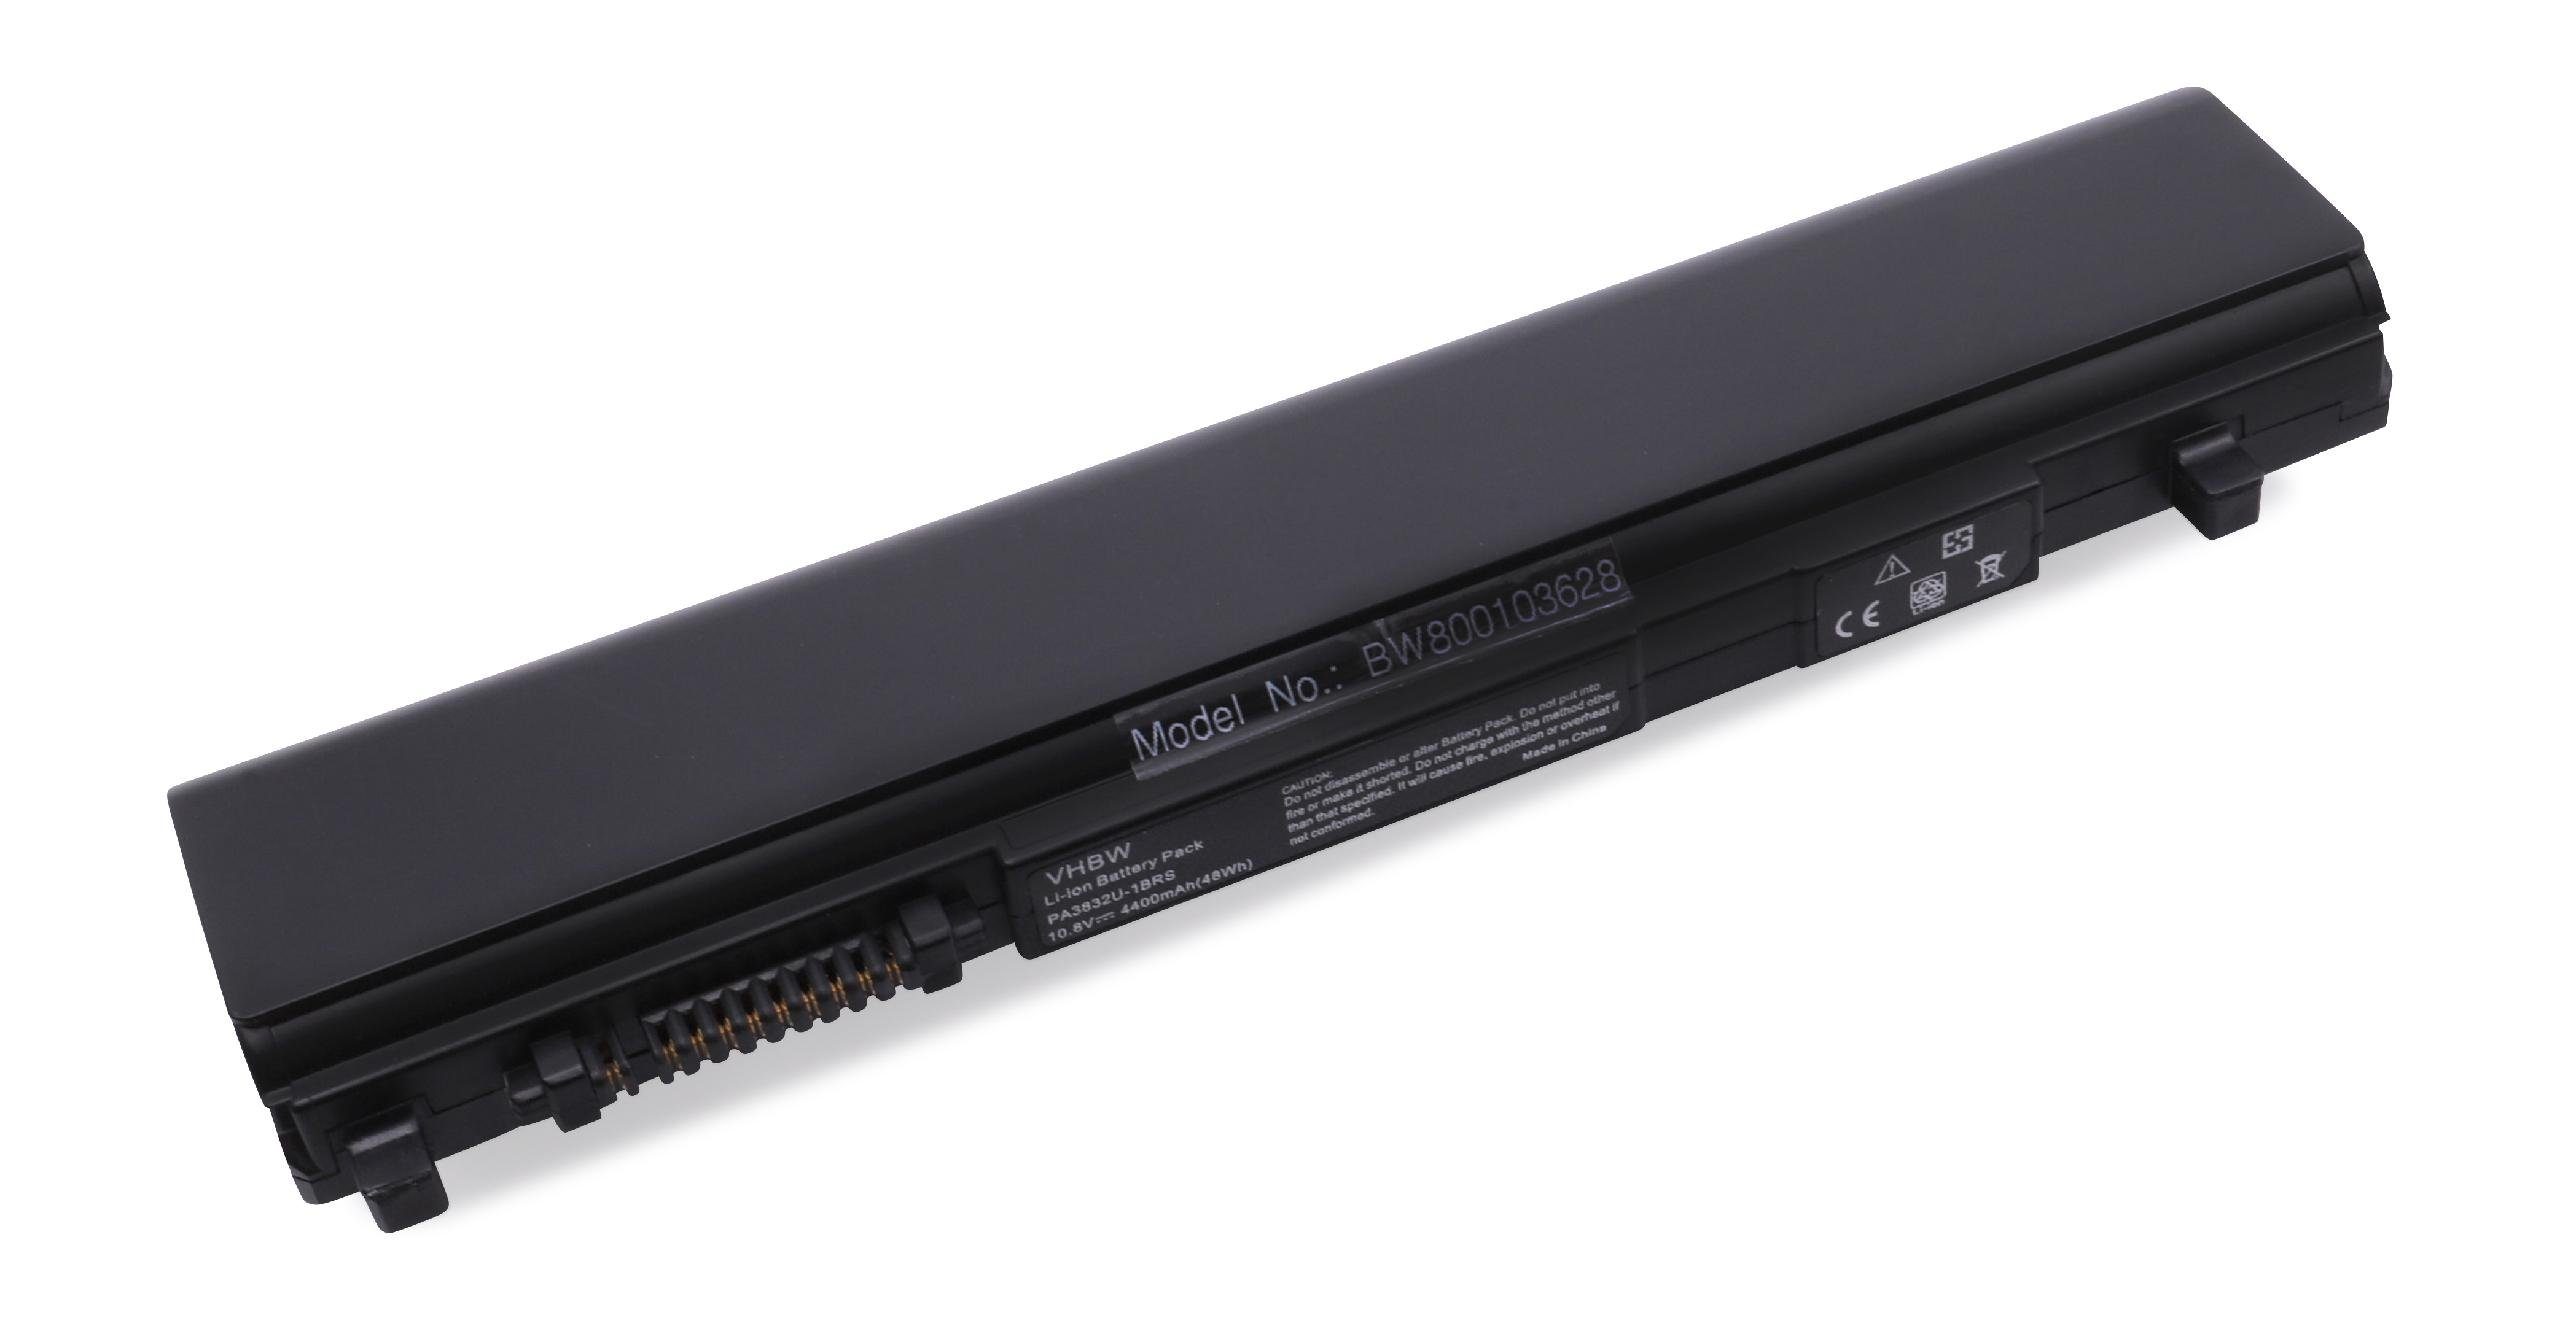 vhbw passend für Toshiba Laptop-Akku R940 mAh PT439A-00R003, PT439A-00N003, Tecra R940 4400